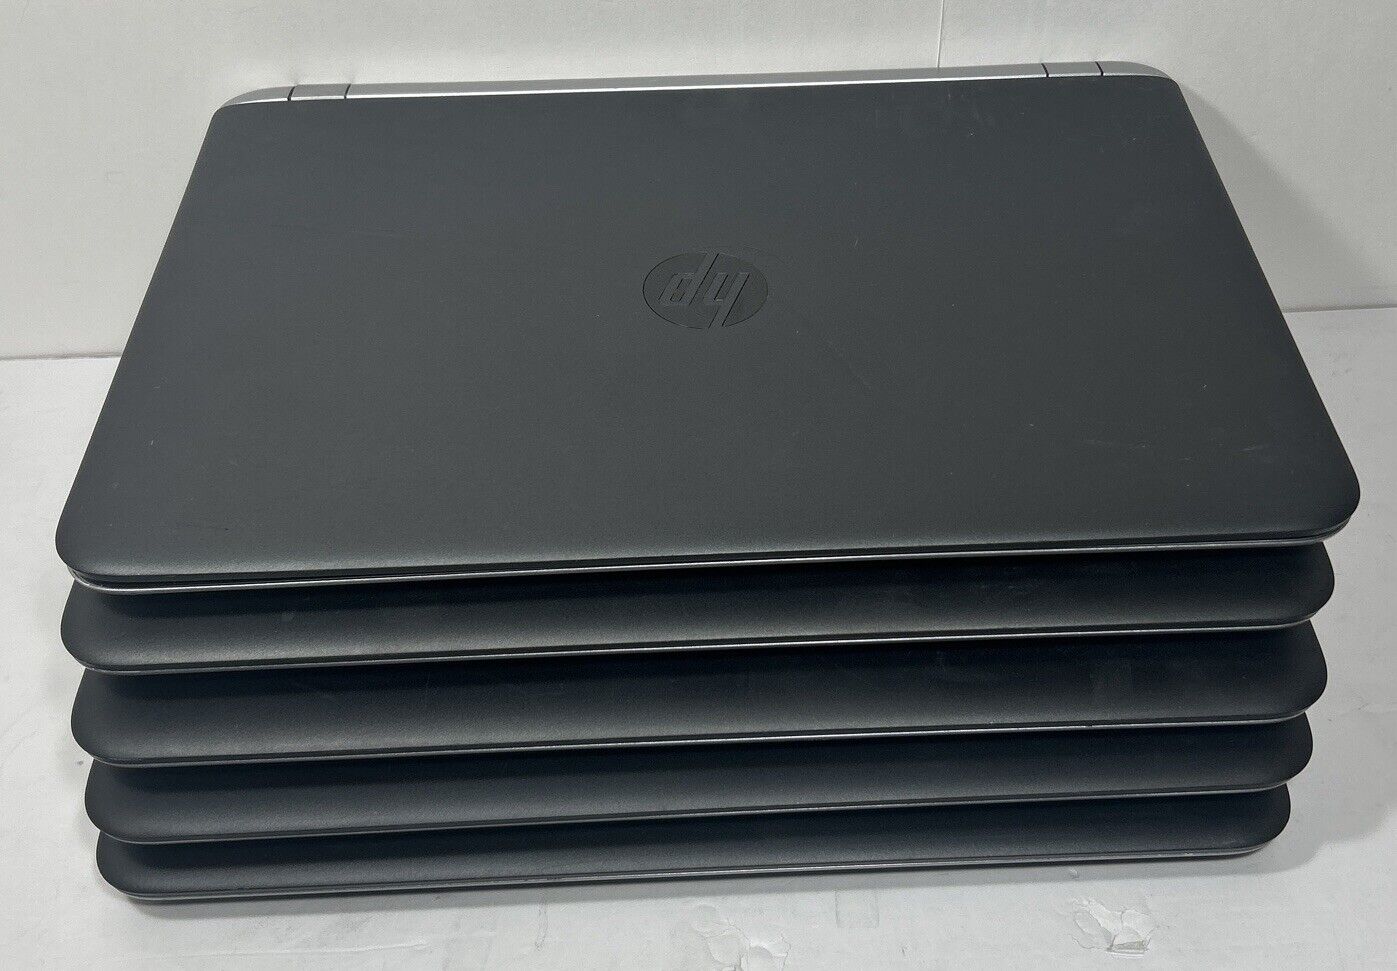 (LOT OF 5) HP ProBook Laptop 450 G3 Intel i5-6200U @ 2.30GHz 8GB RAM - NO SSD OS